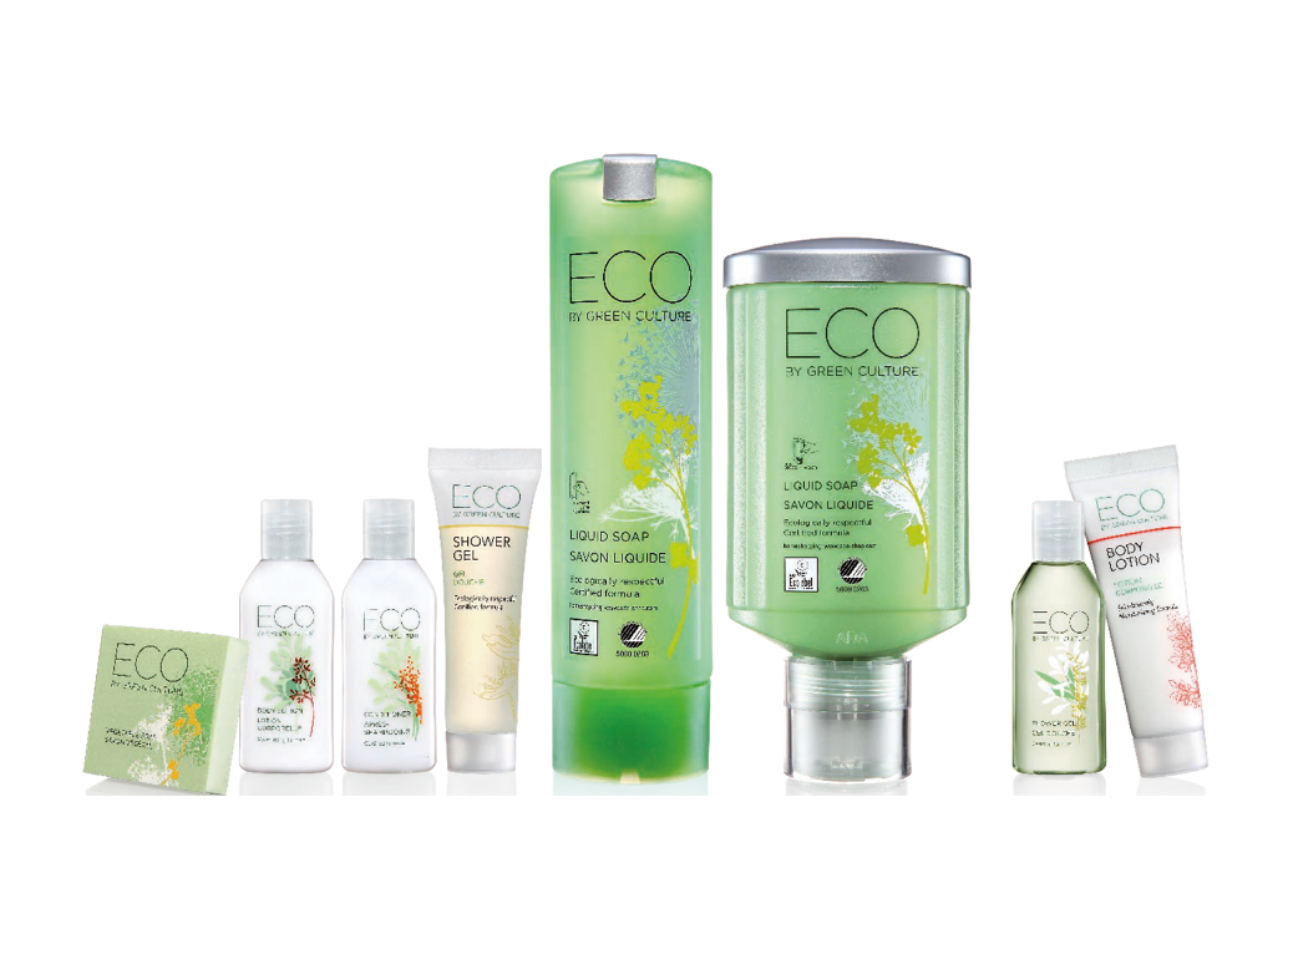 Eco by Green Culture Haar- & Körperpflege - press+wash, 300 ml